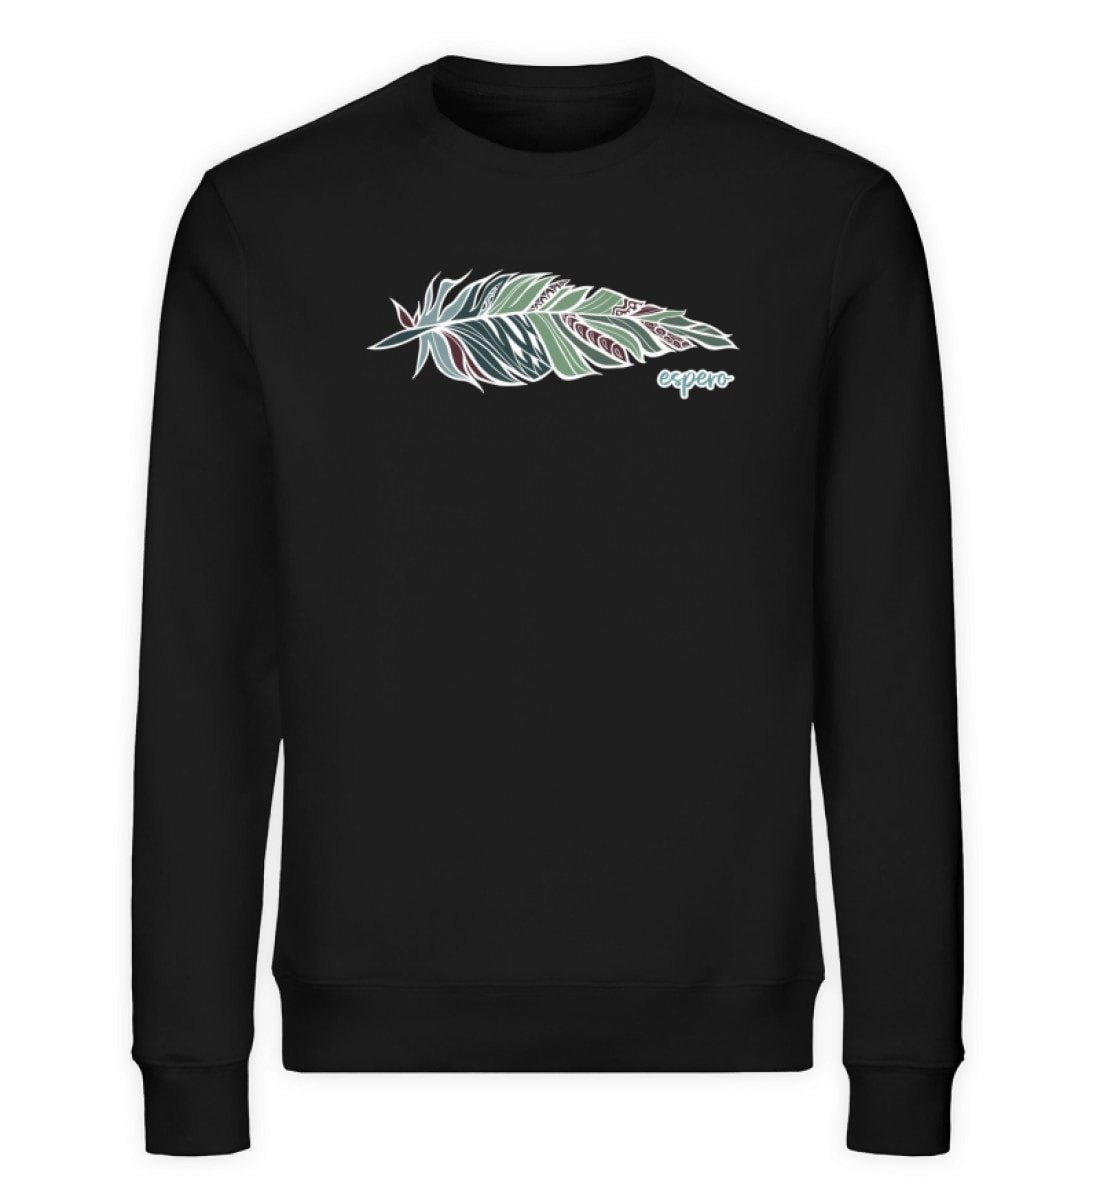 Sweater Life Fly Schwarz - Unisex Organic Sweatshirt-16